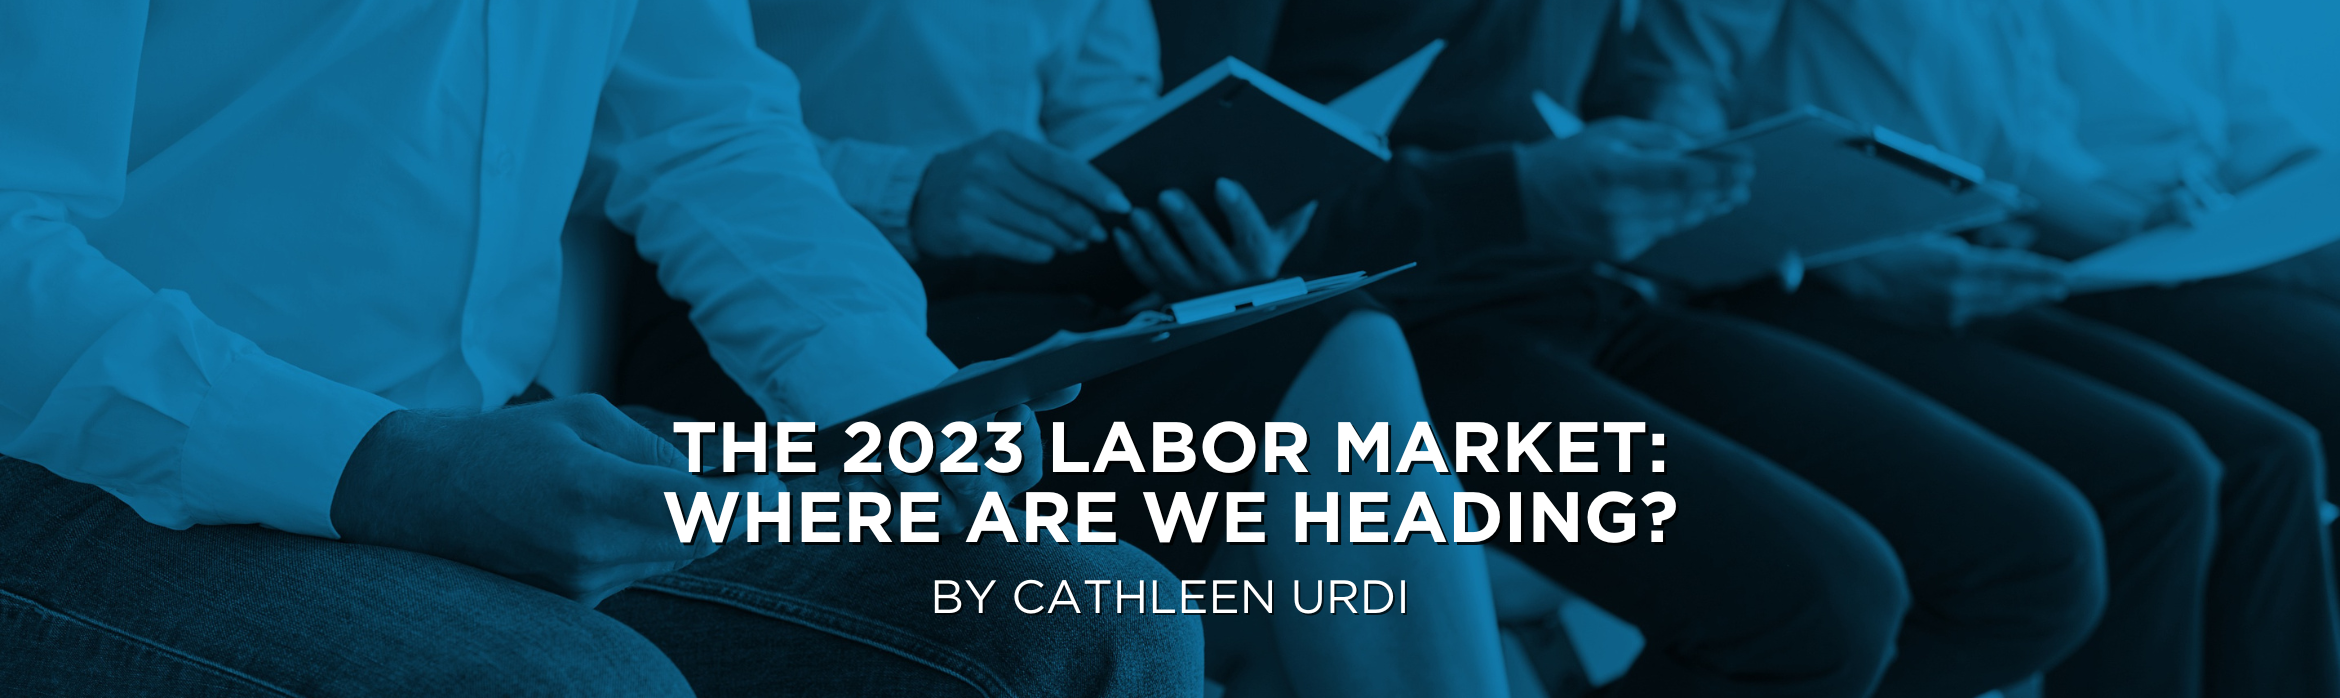 The 2023 Labor Market: Where are we heading?